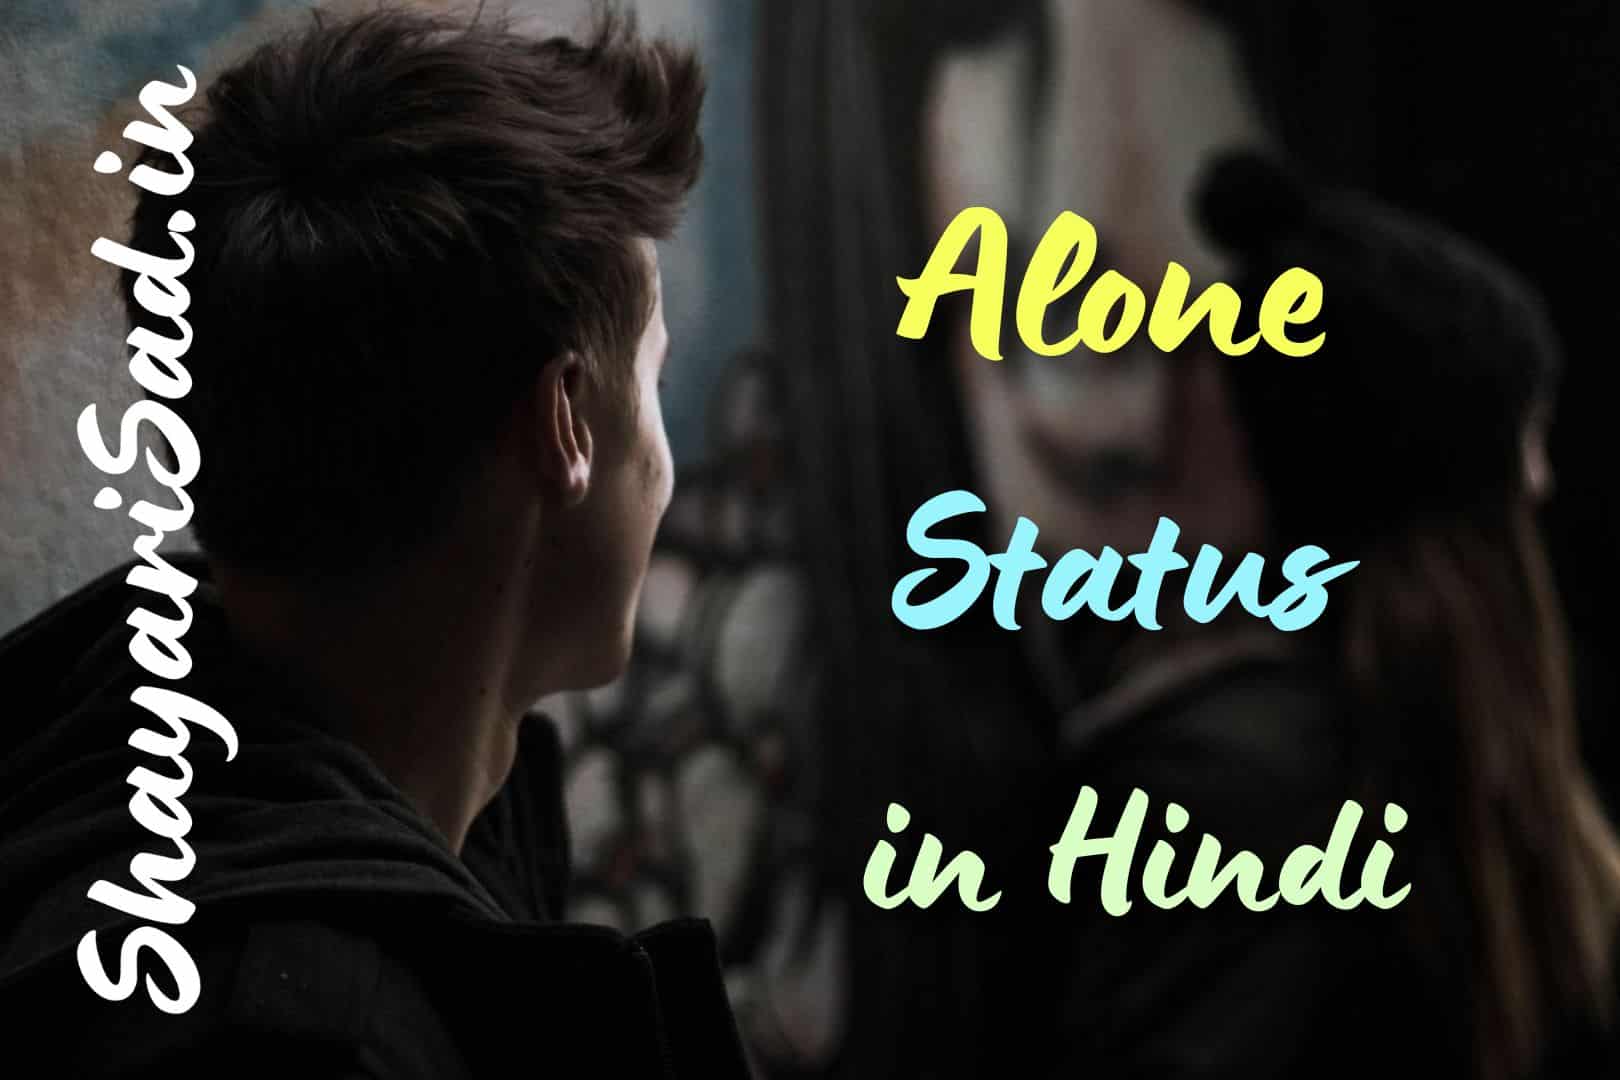 alone status in hindi